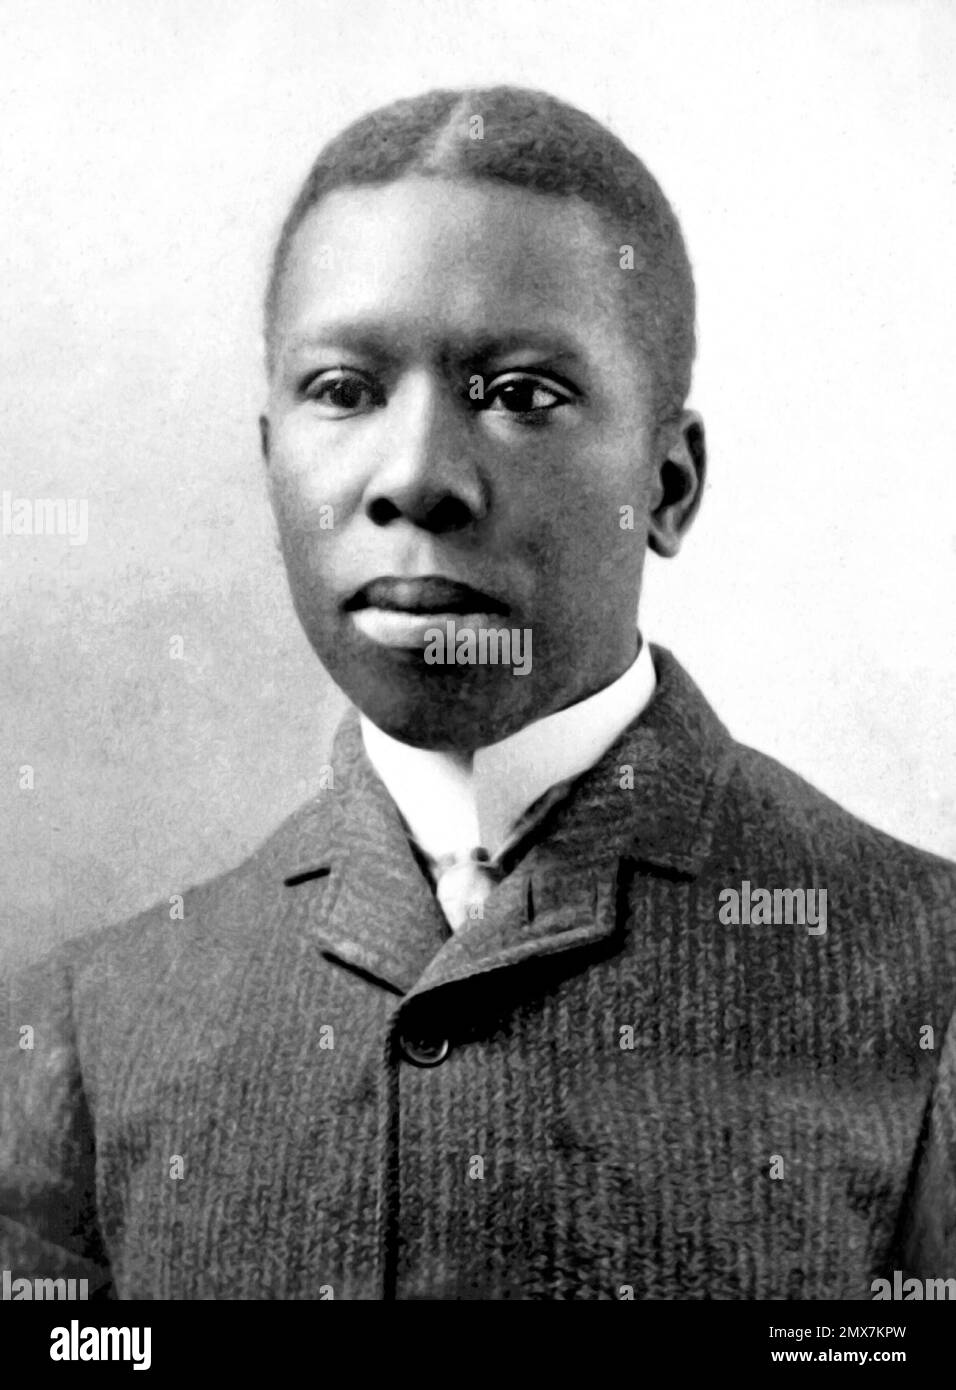 Paul Laurence Dunbar. Portrait des afroamerikanischen Dichters und Schriftstellers Paul Laurence Dunbar (1872-1906) c. 1890 Stockfoto